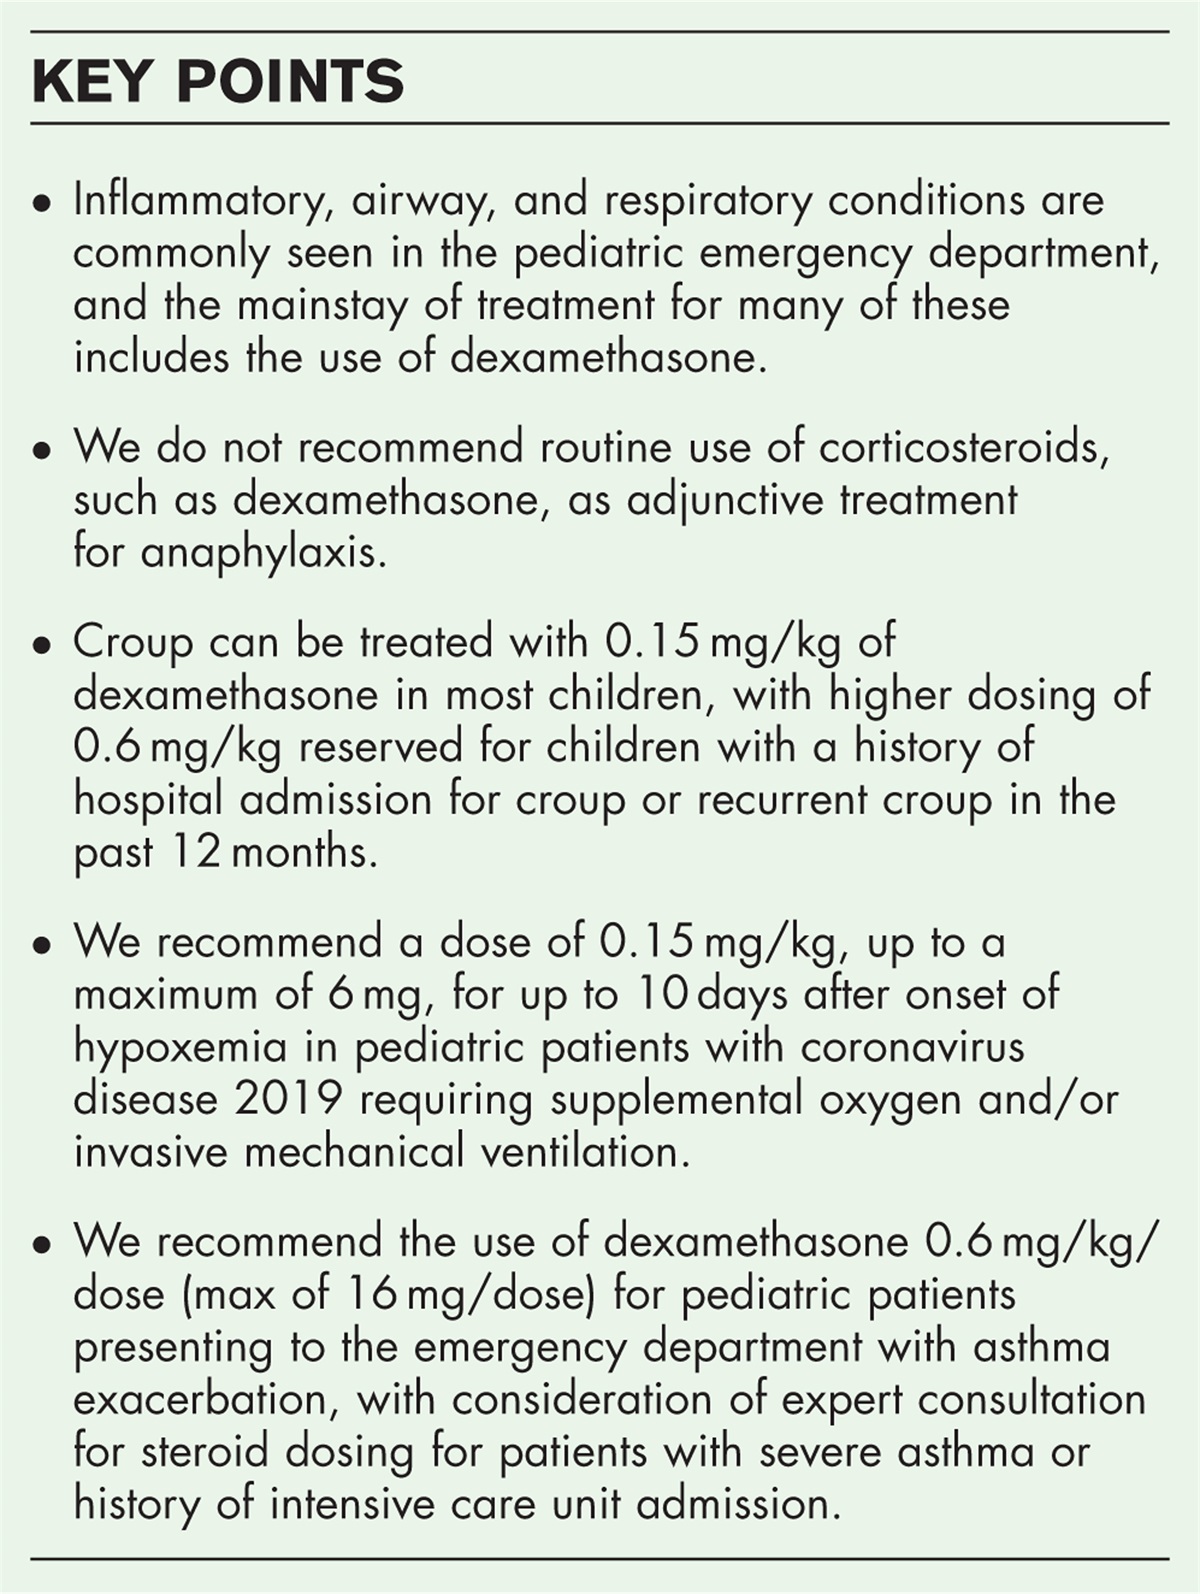 Revisiting dexamethasone use in the pediatric emergency department